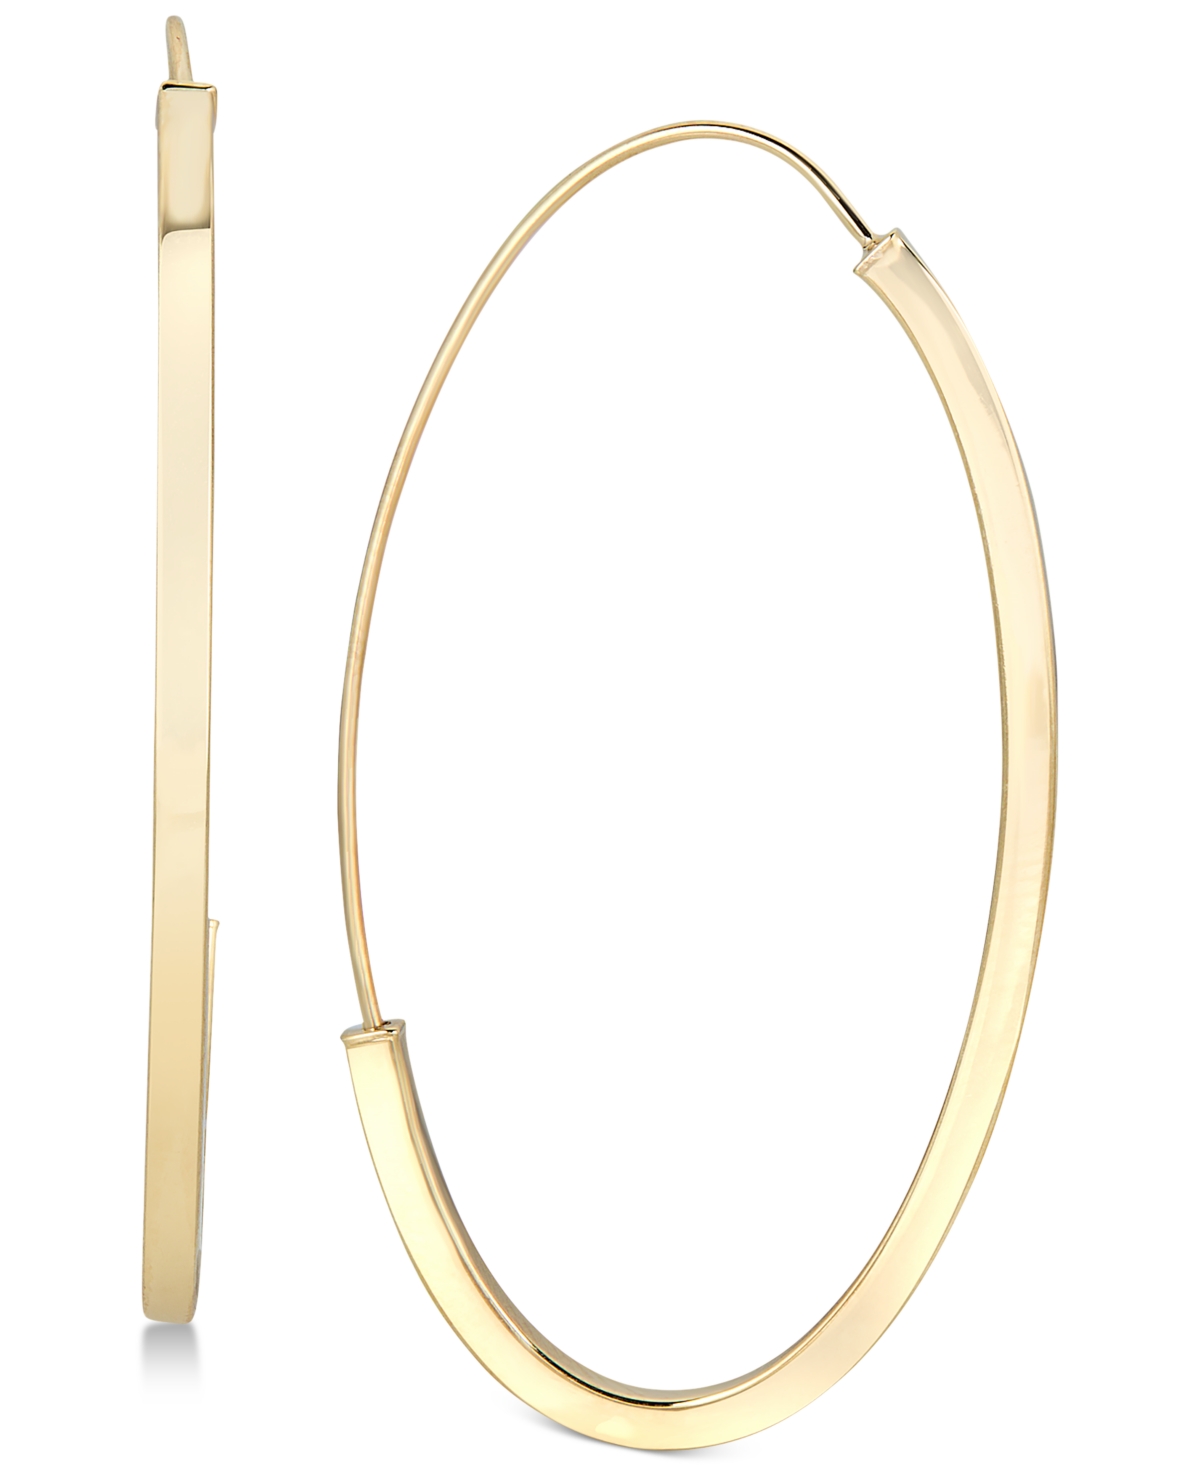 Threader Hoop Earrings in 14k Gold - Gold